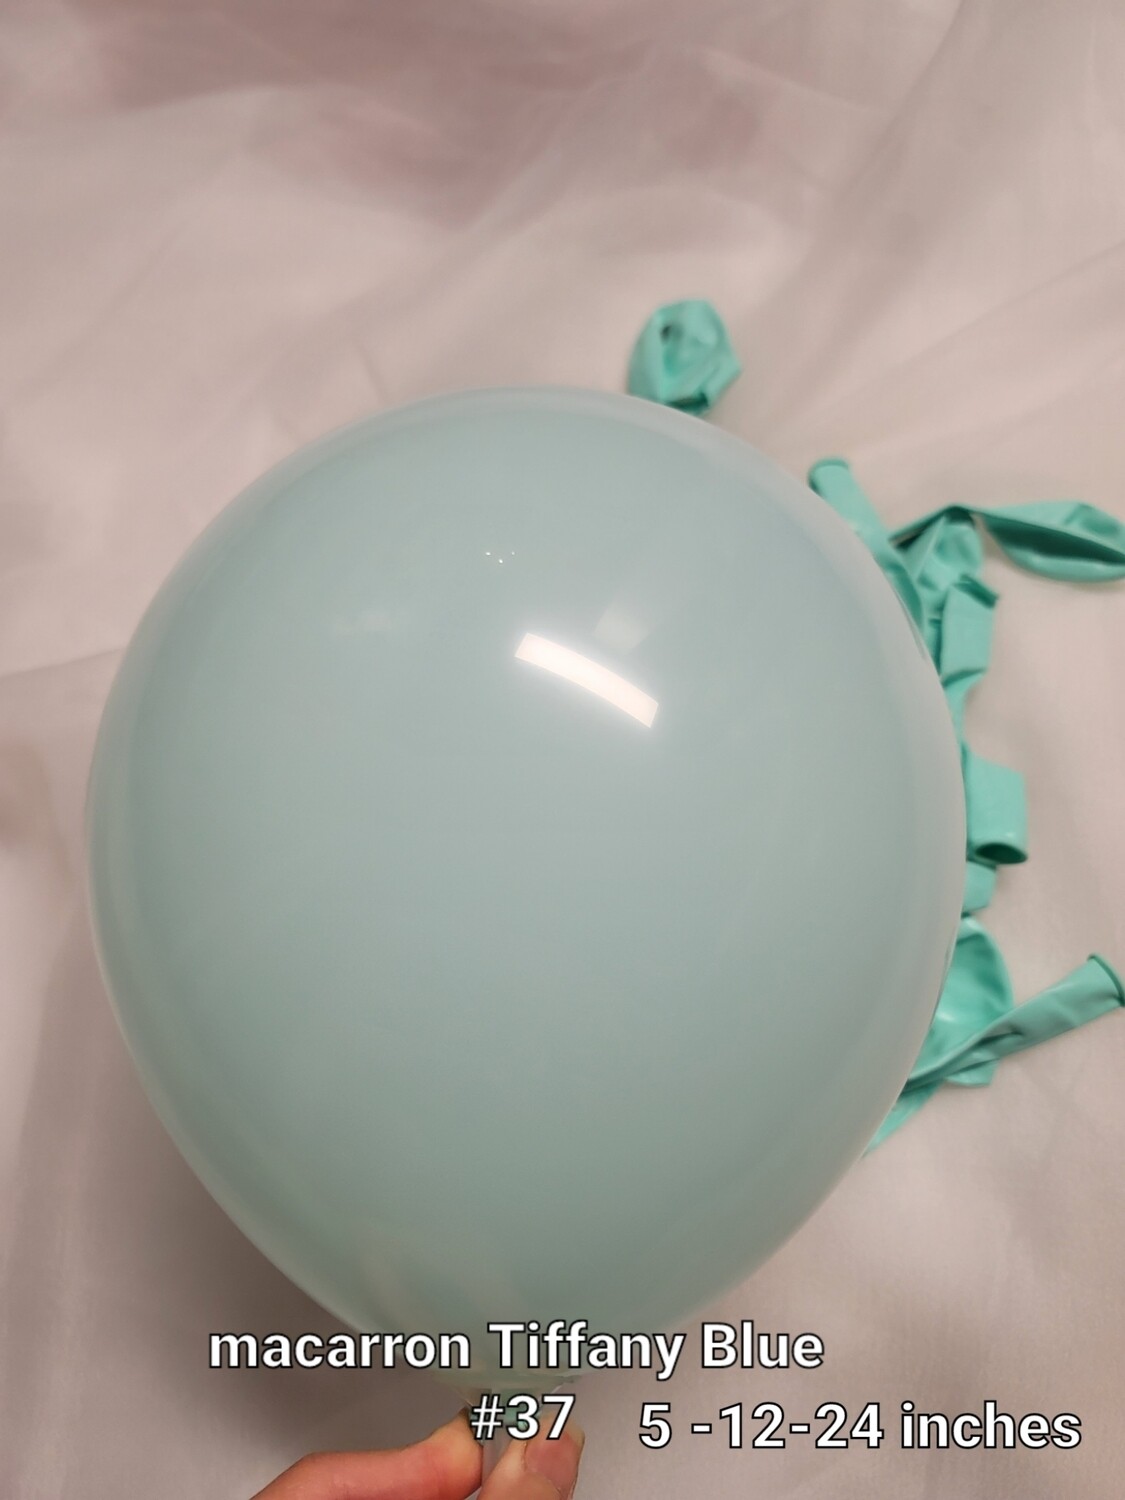 Maccaron Tiffany blue balloon